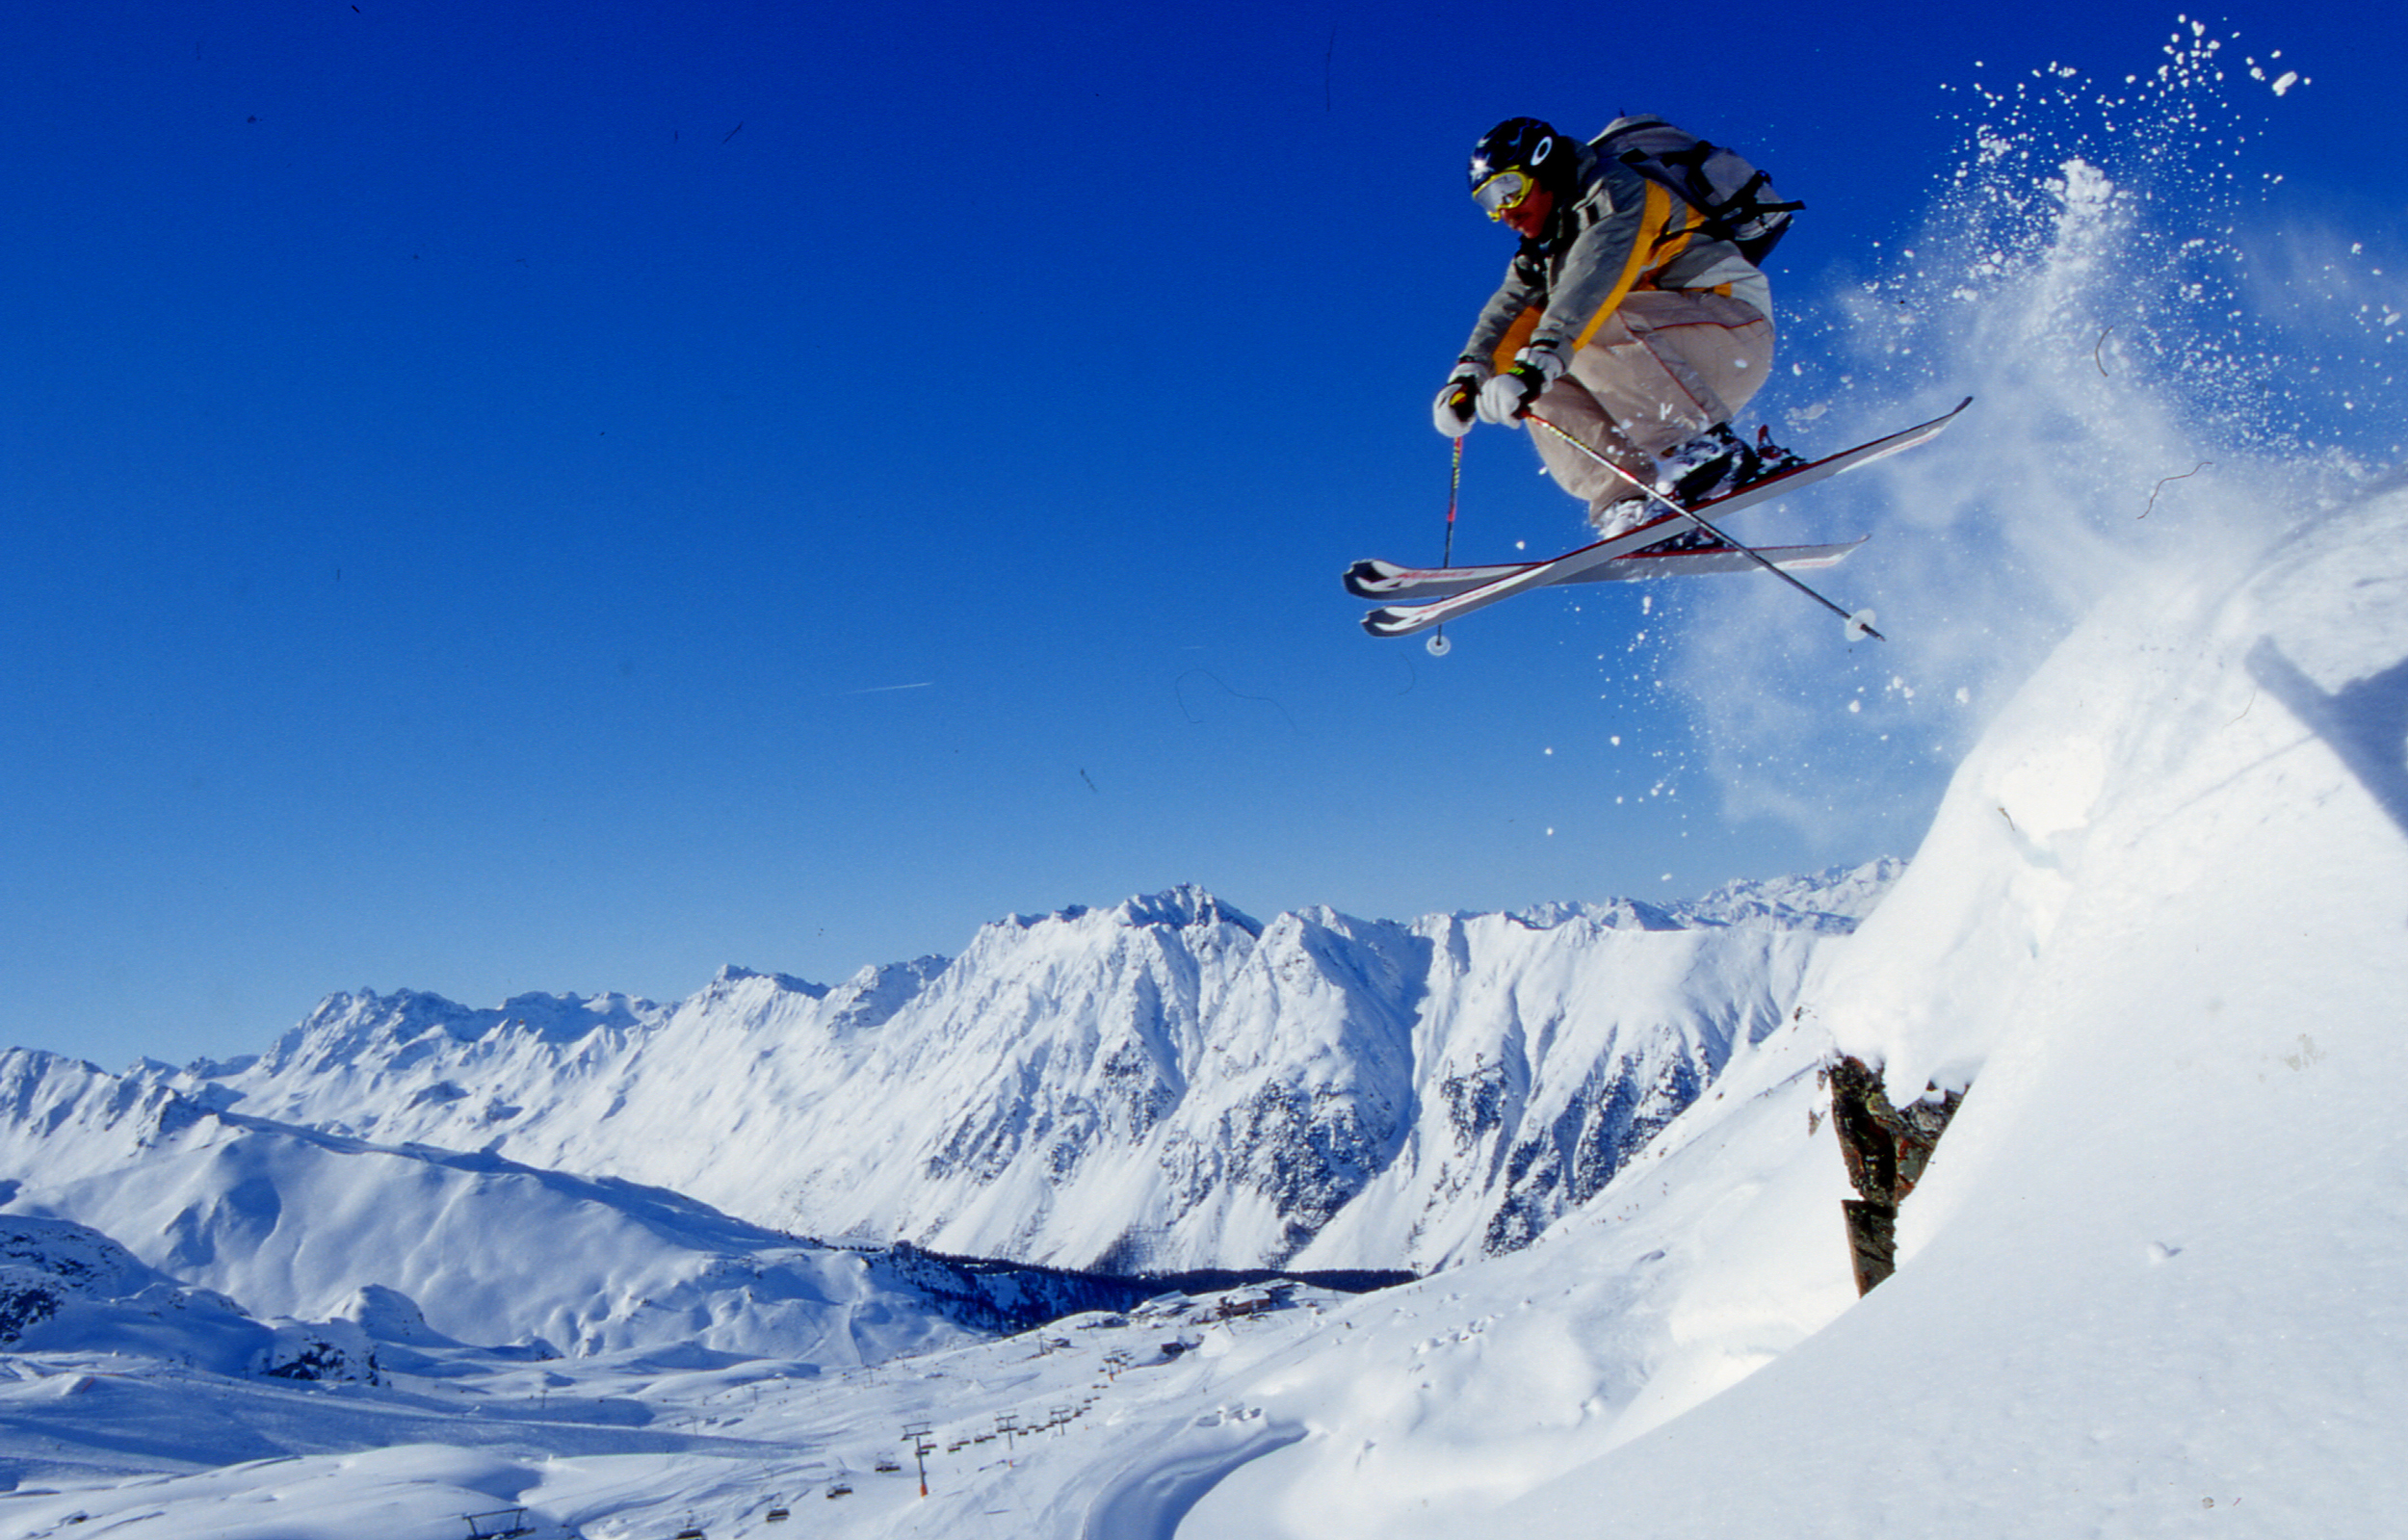 Ski aggu joost otto. Горнолыжный спорт. Горные лыжи. Горные лыжи спорт. Горнолыжный спуск.